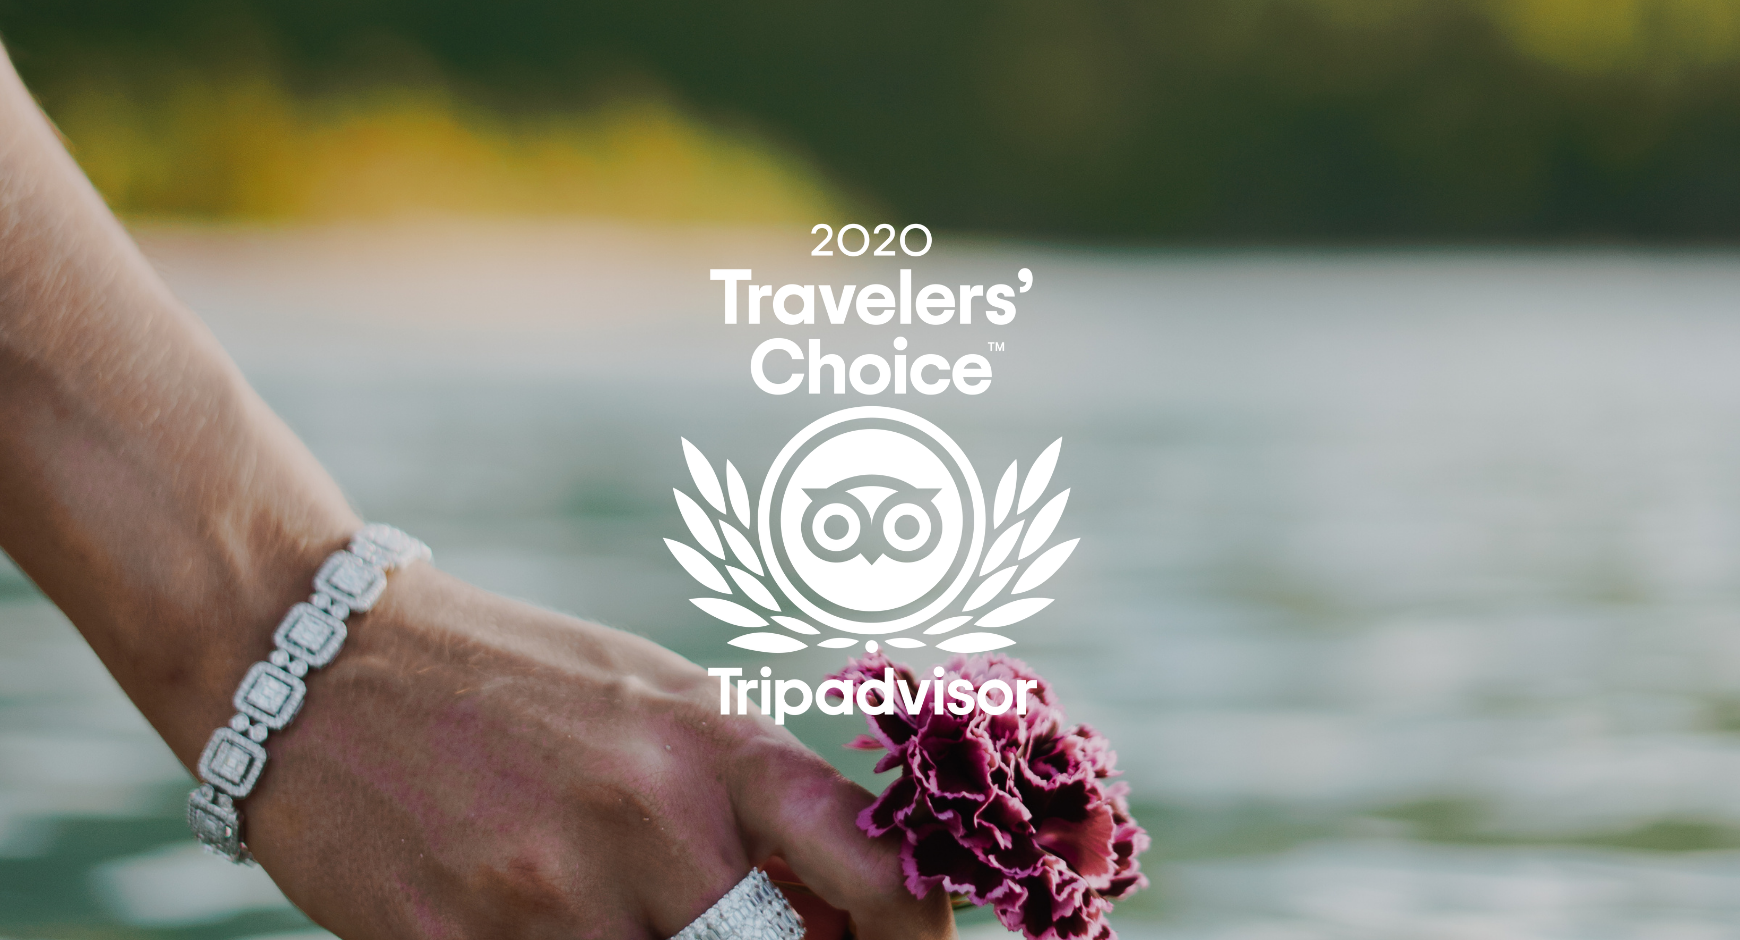 Grand Jewelers Wins 2020 TripAdvisor Travelers’ Choice Award